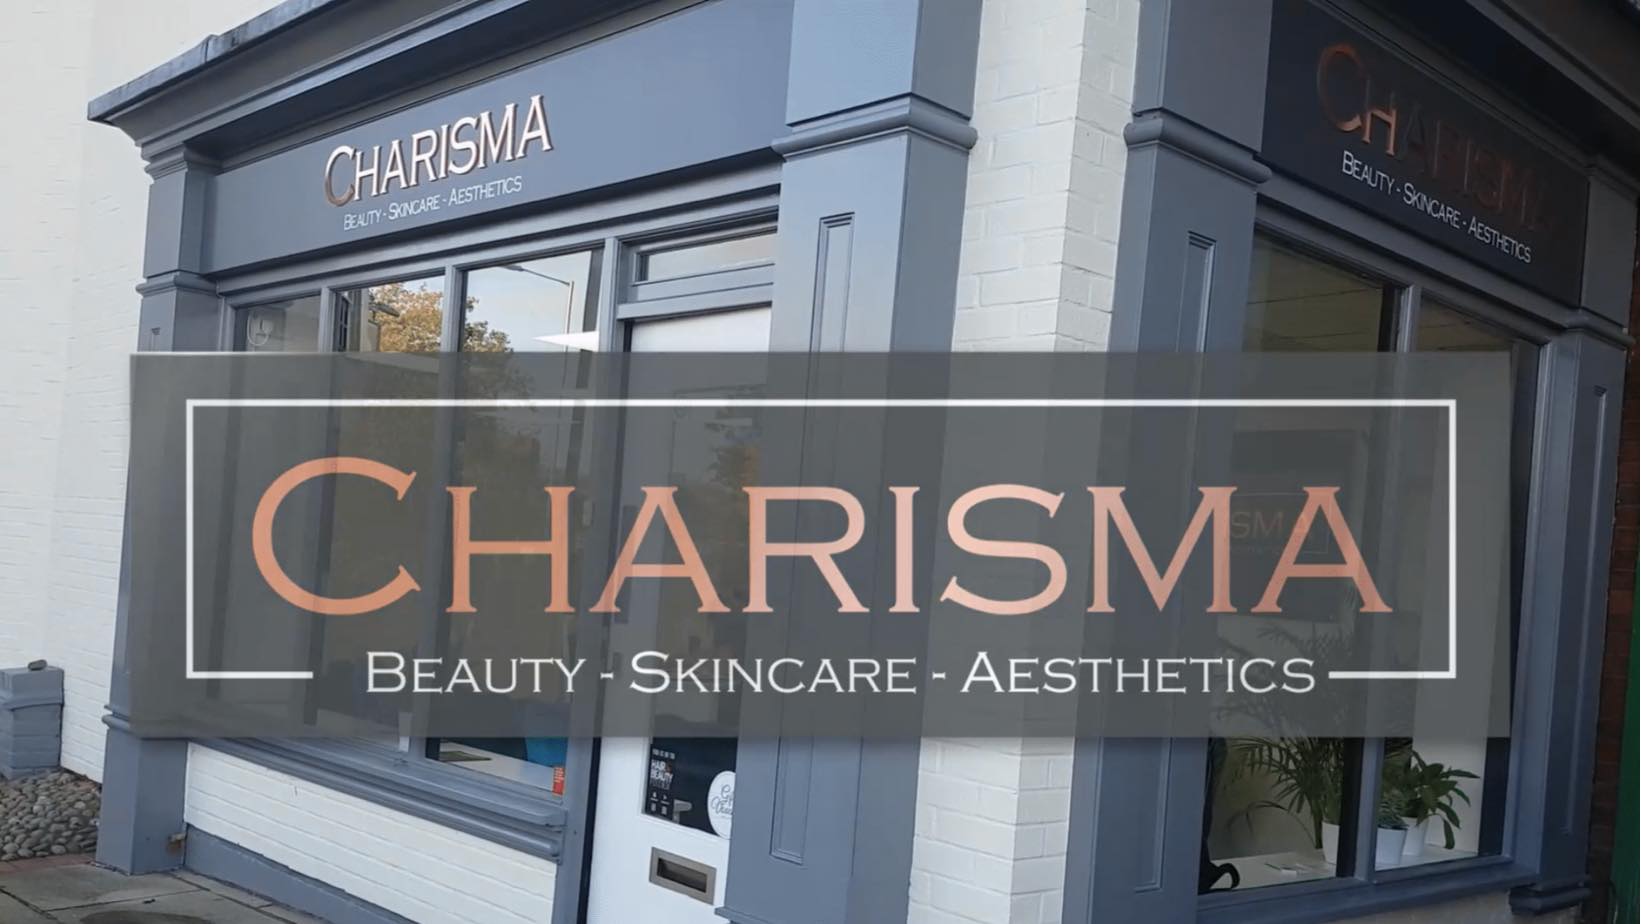 Charisma Beauty Skincare Aesthetics